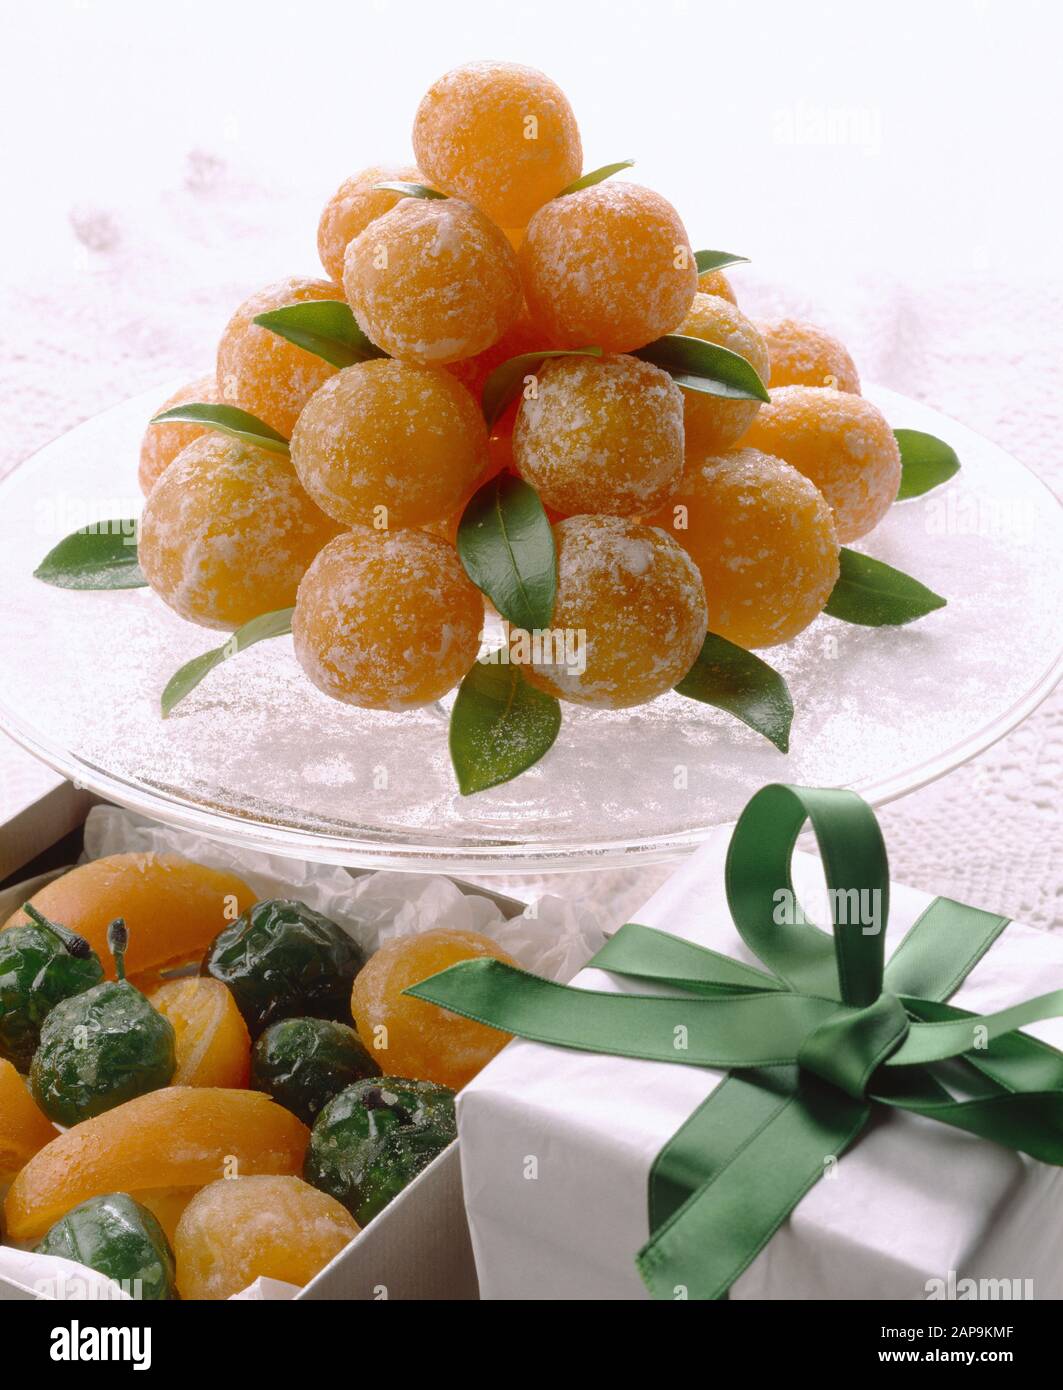 Crystallised fruit: tangerine, orange slices and plums. Stock Photo